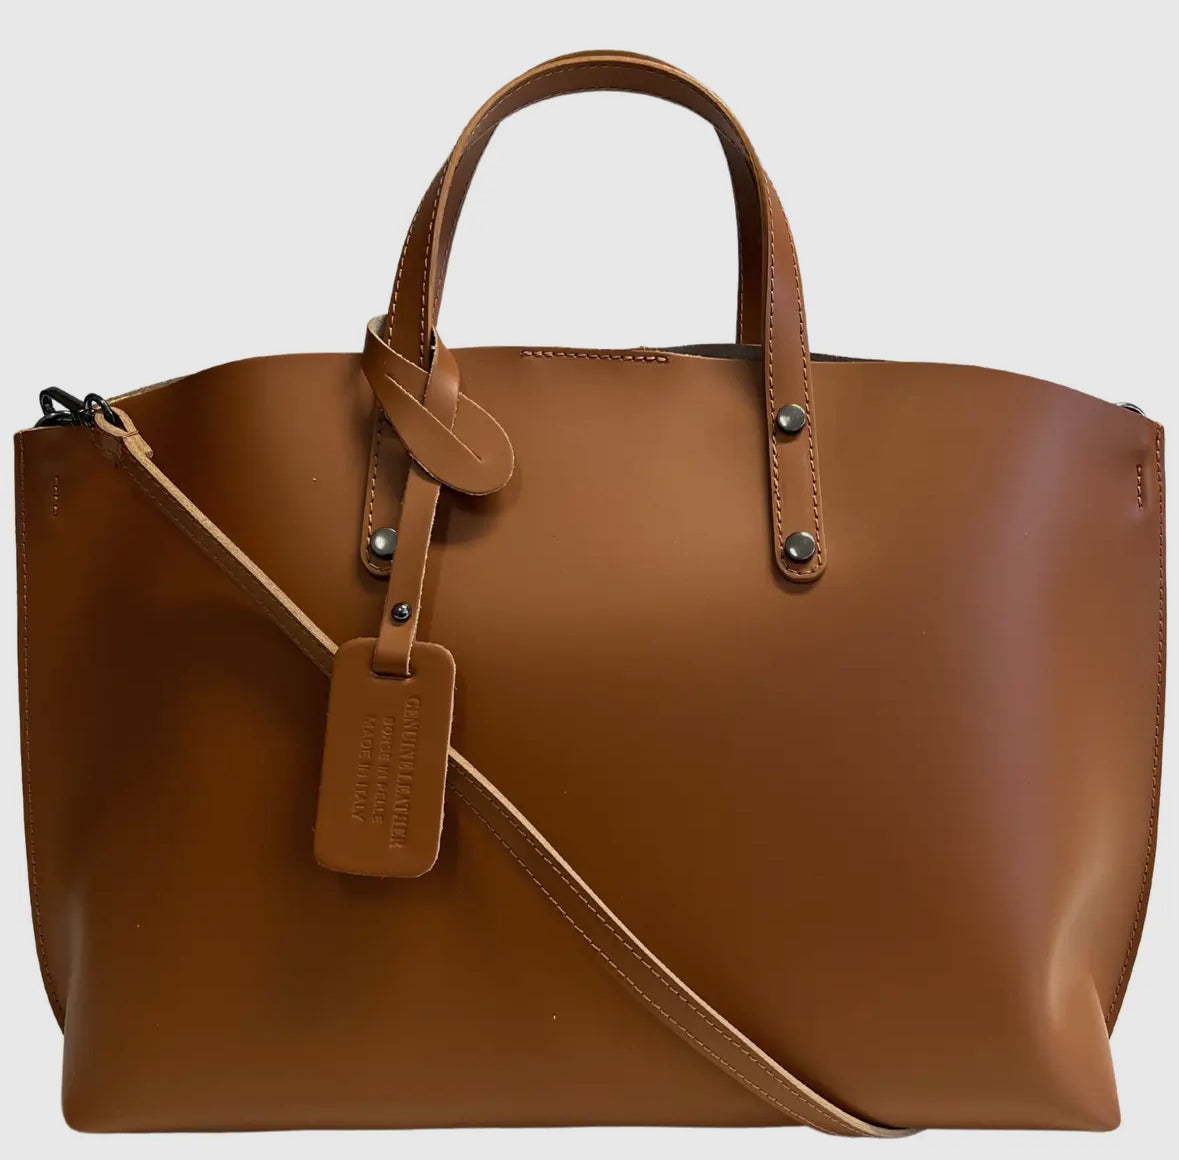 Leather tote bag by Mondarno